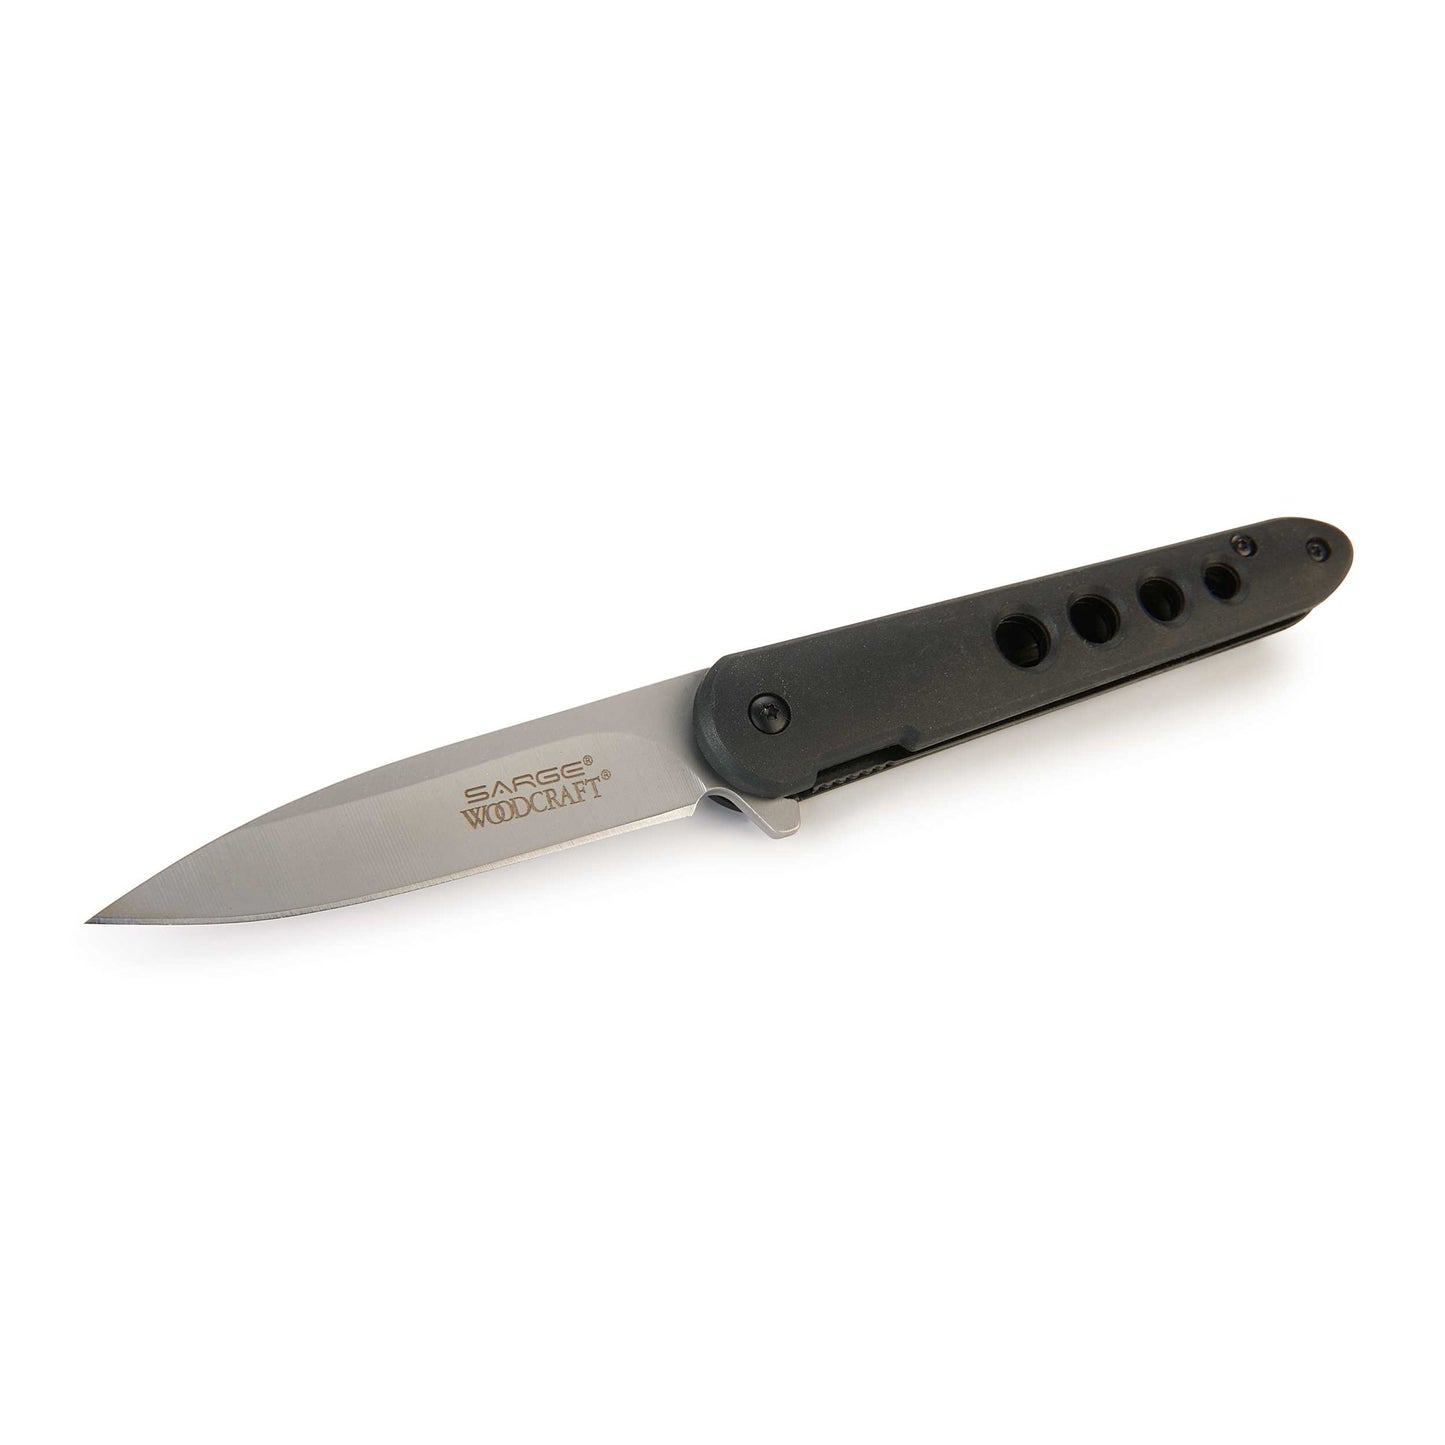 2022 Edition Woodcraft Drop Point Blade Pocket Knife alt 0